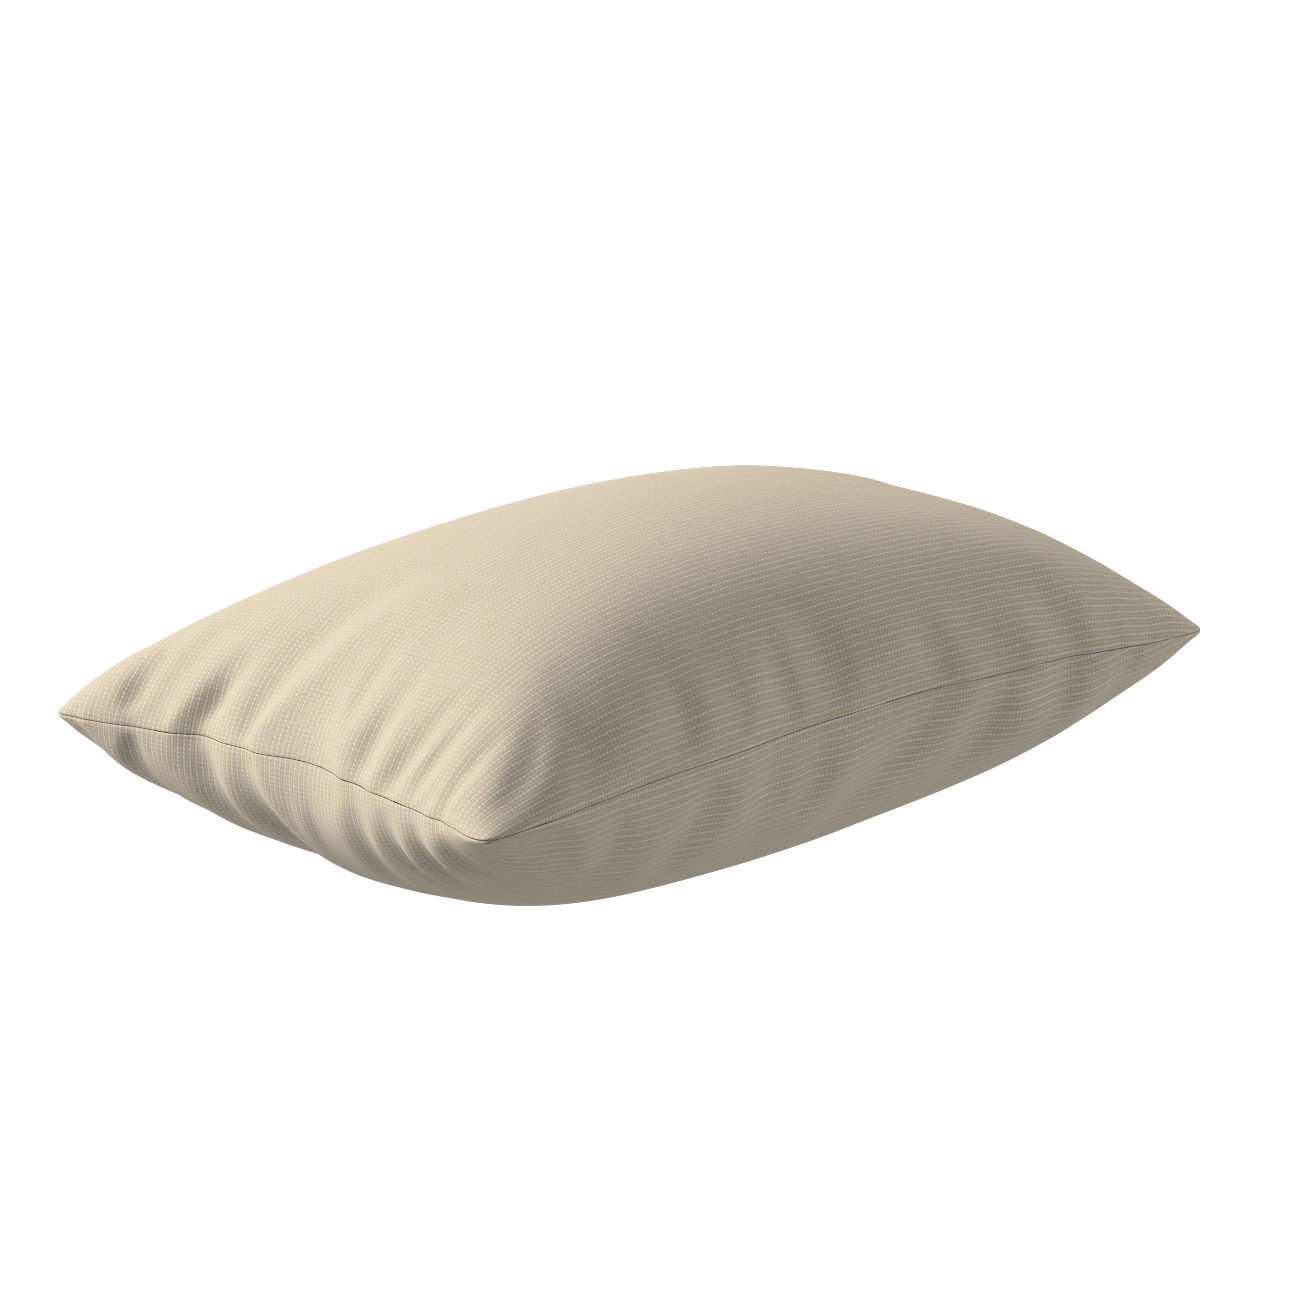 Kissenhülle Kinga rechteckig, beige-creme, 60 x 40 cm, Outdoor Oasis (703-3 günstig online kaufen